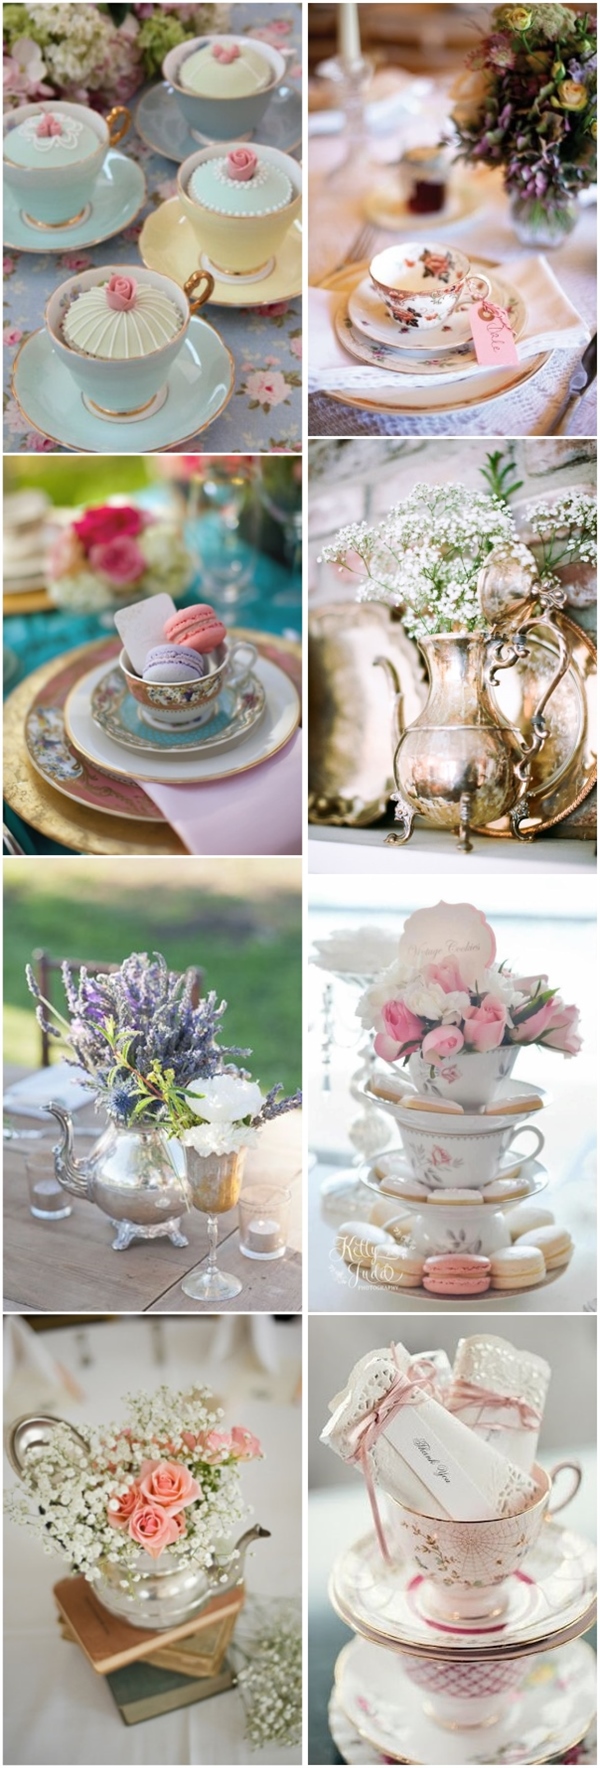 vintage weddingtheme ideas- teapot and tea cup wedding decor